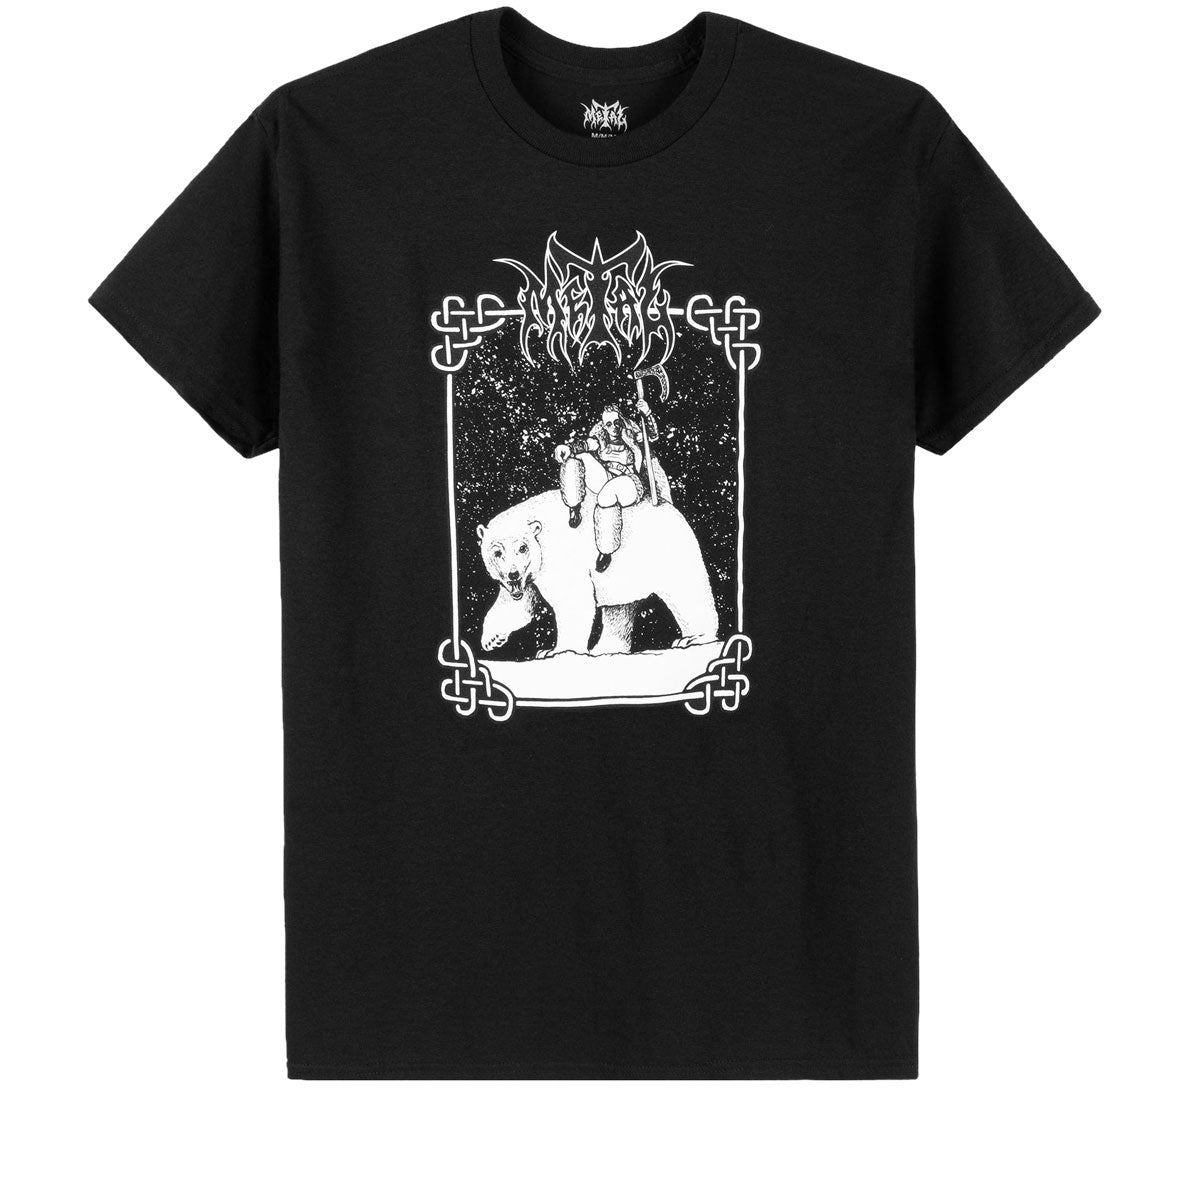 Metal Valkyrie T-Shirt - Black image 1